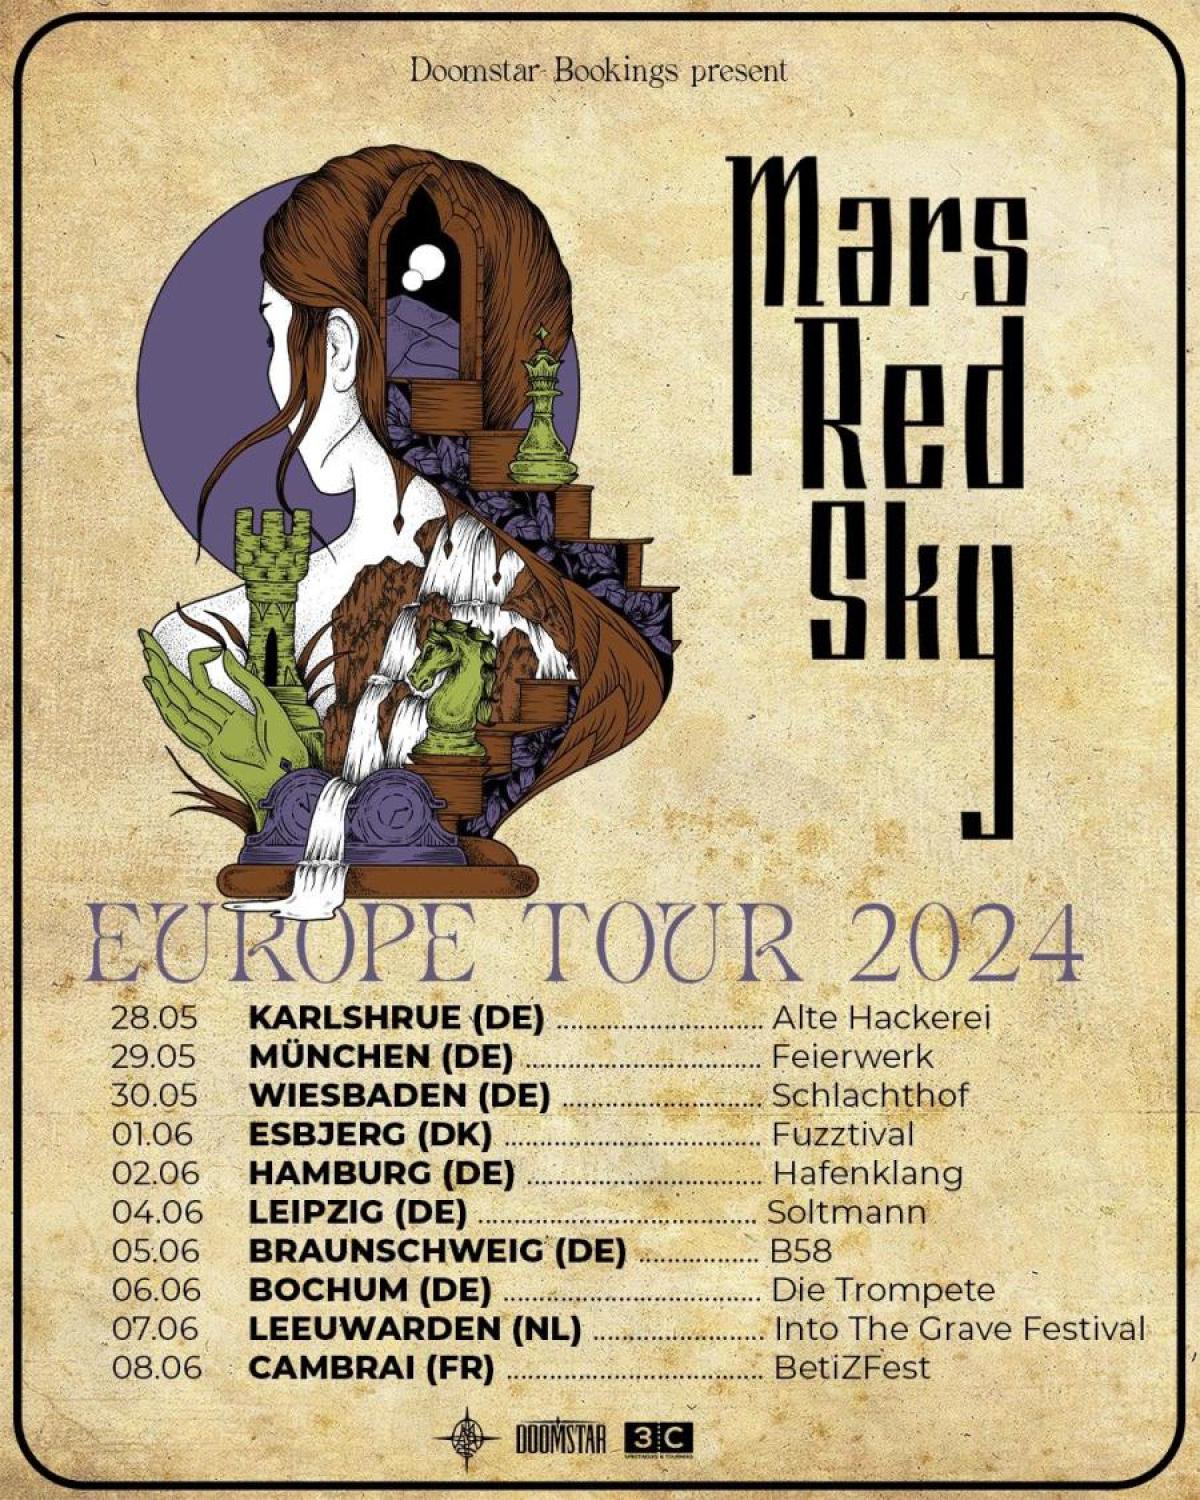 Billets Mars Red Sky - European Tour 2024 (Die Trompete Bochum - Bochum)